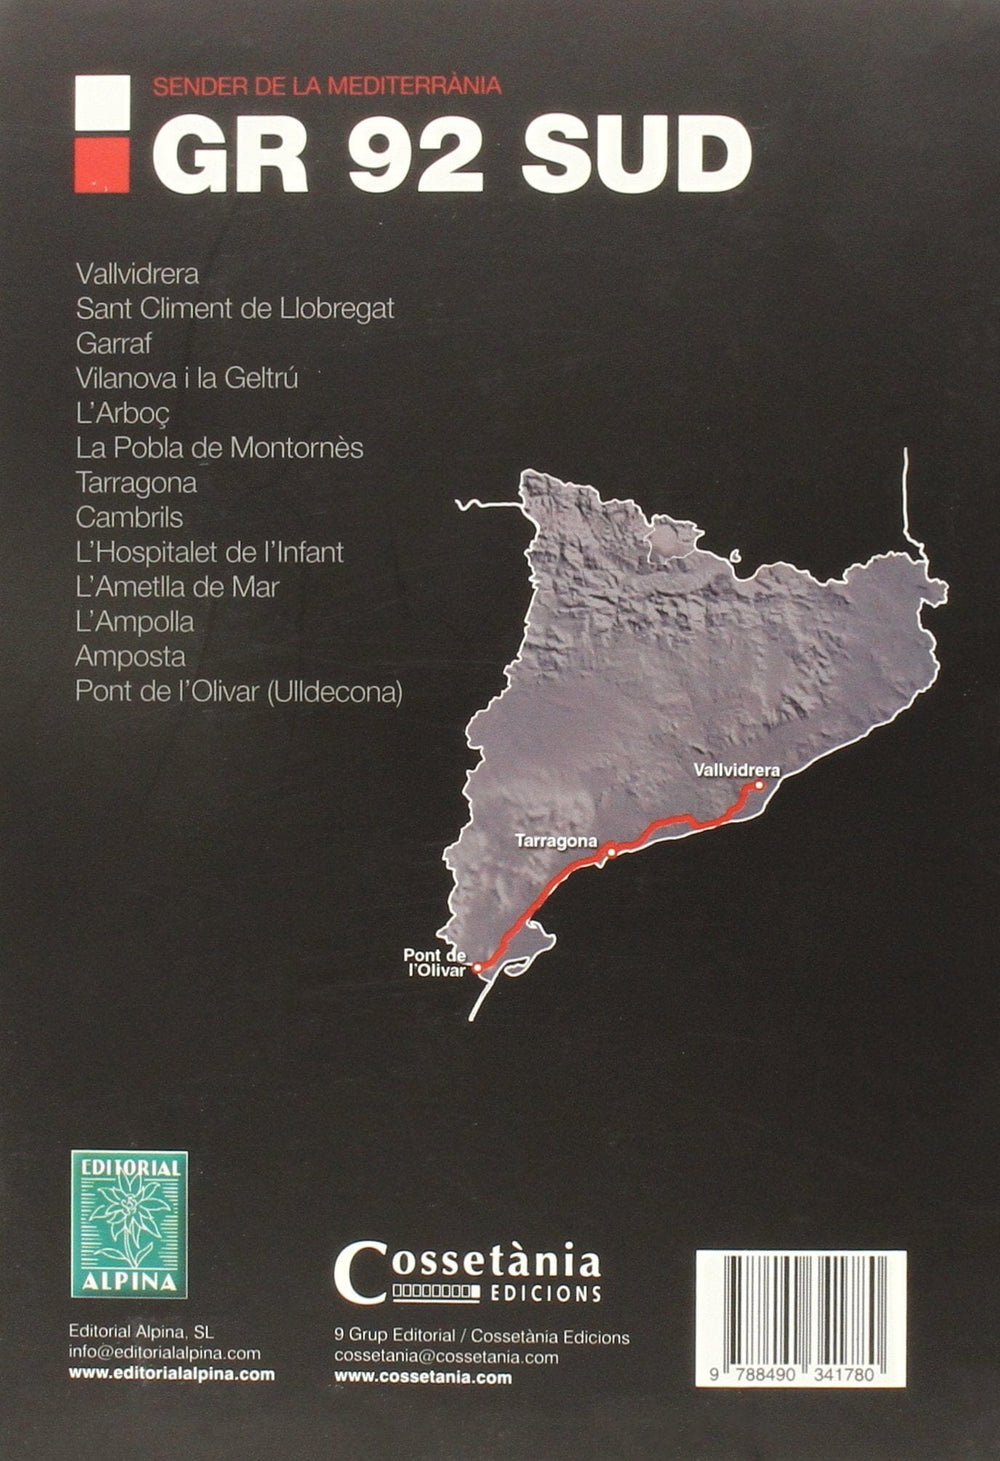 Carte & Guide de randonnée - Sender de la Mediterrania GR92 Sud (Catalogne) | Alpina carte pliée Editorial Alpina 